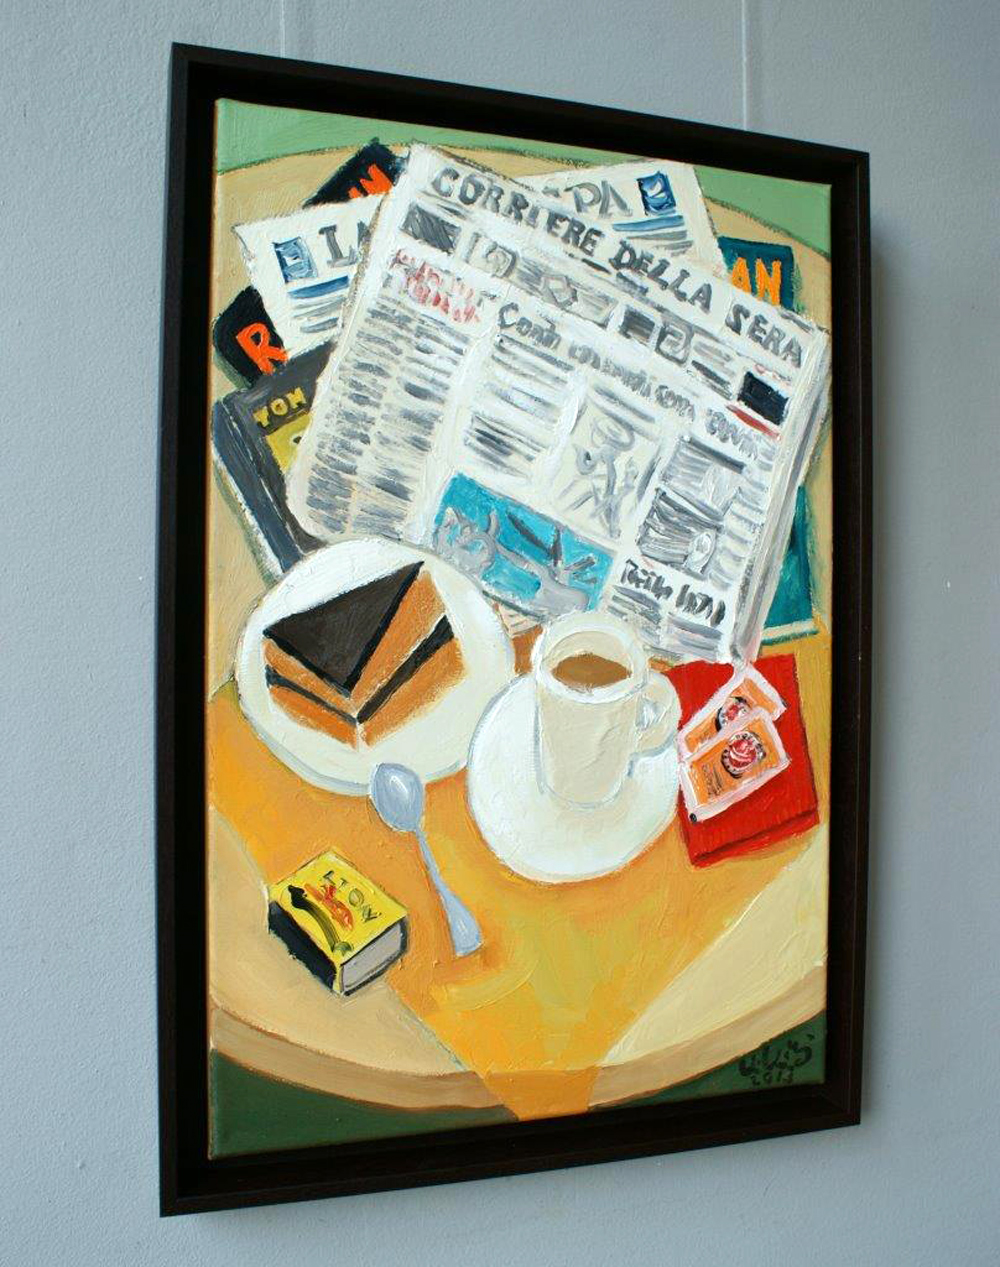 Krzysztof Kokoryn - Corriere Della Sera (Oil on Canvas | Size: 45 x 65 cm | Price: 5500 PLN)